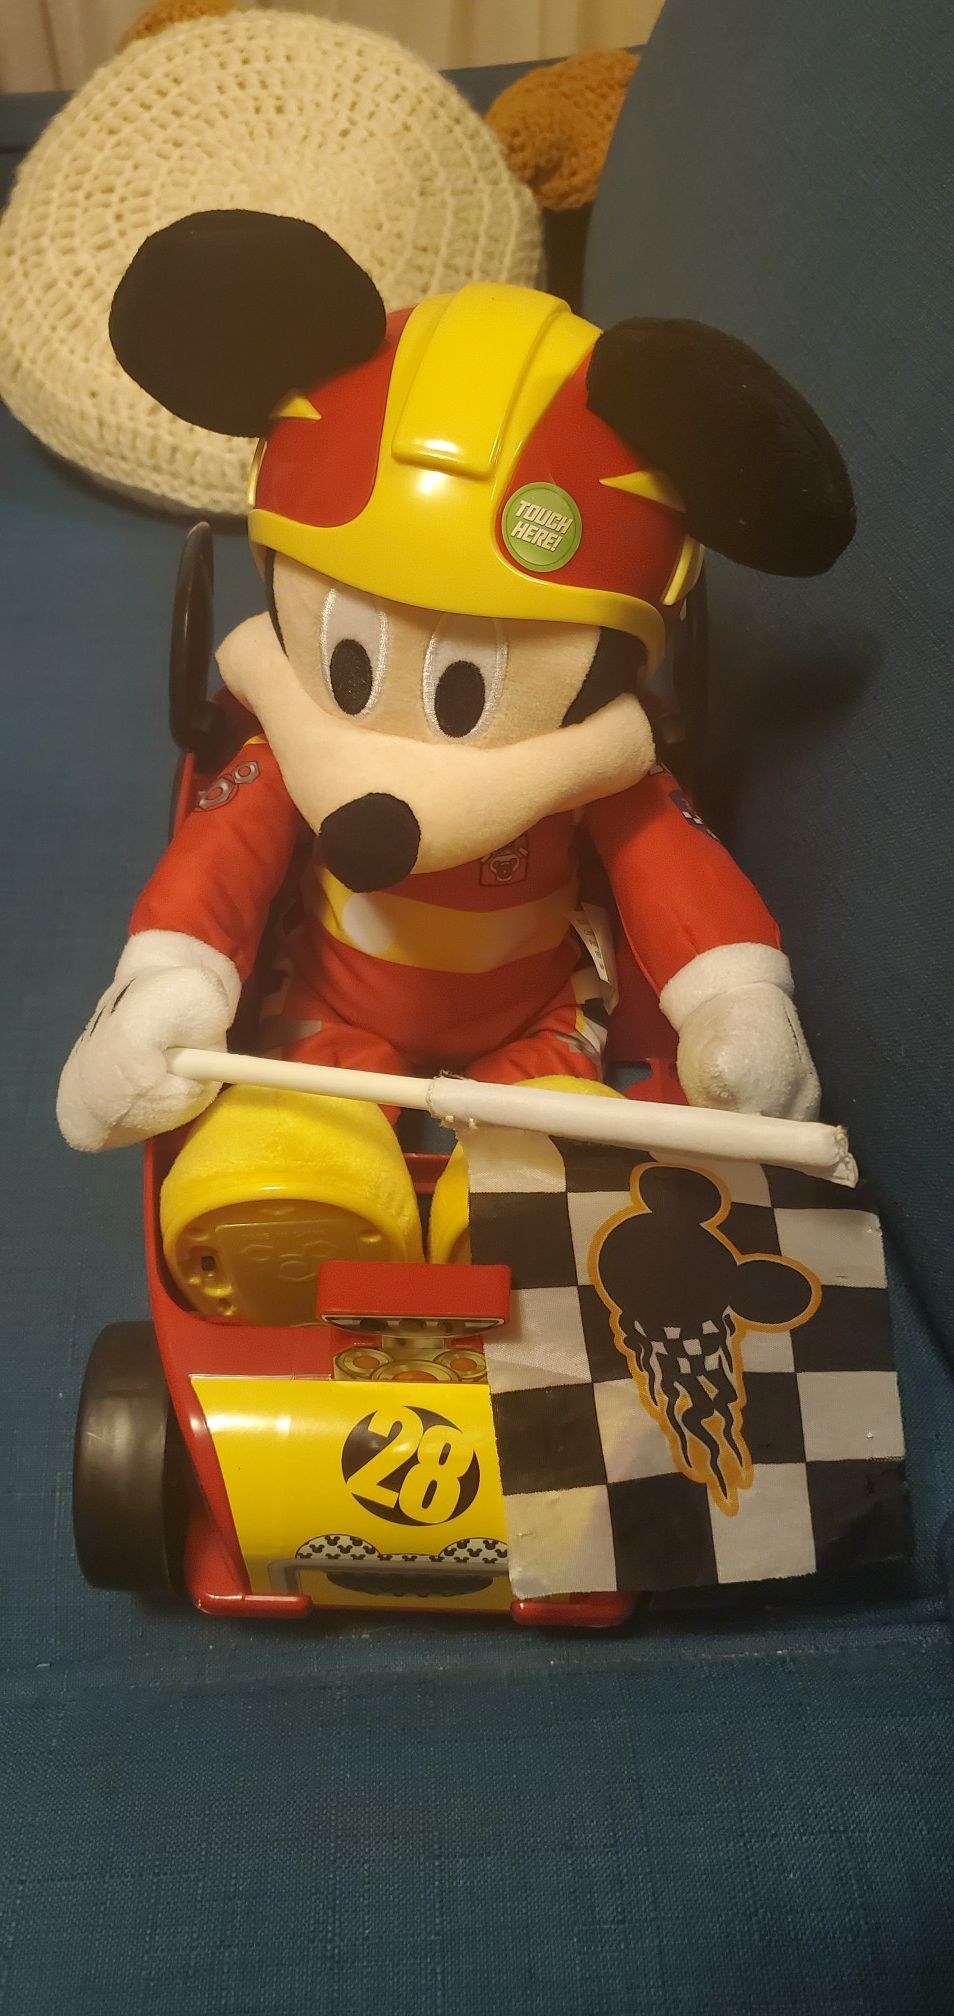 Mickeys roadster racer